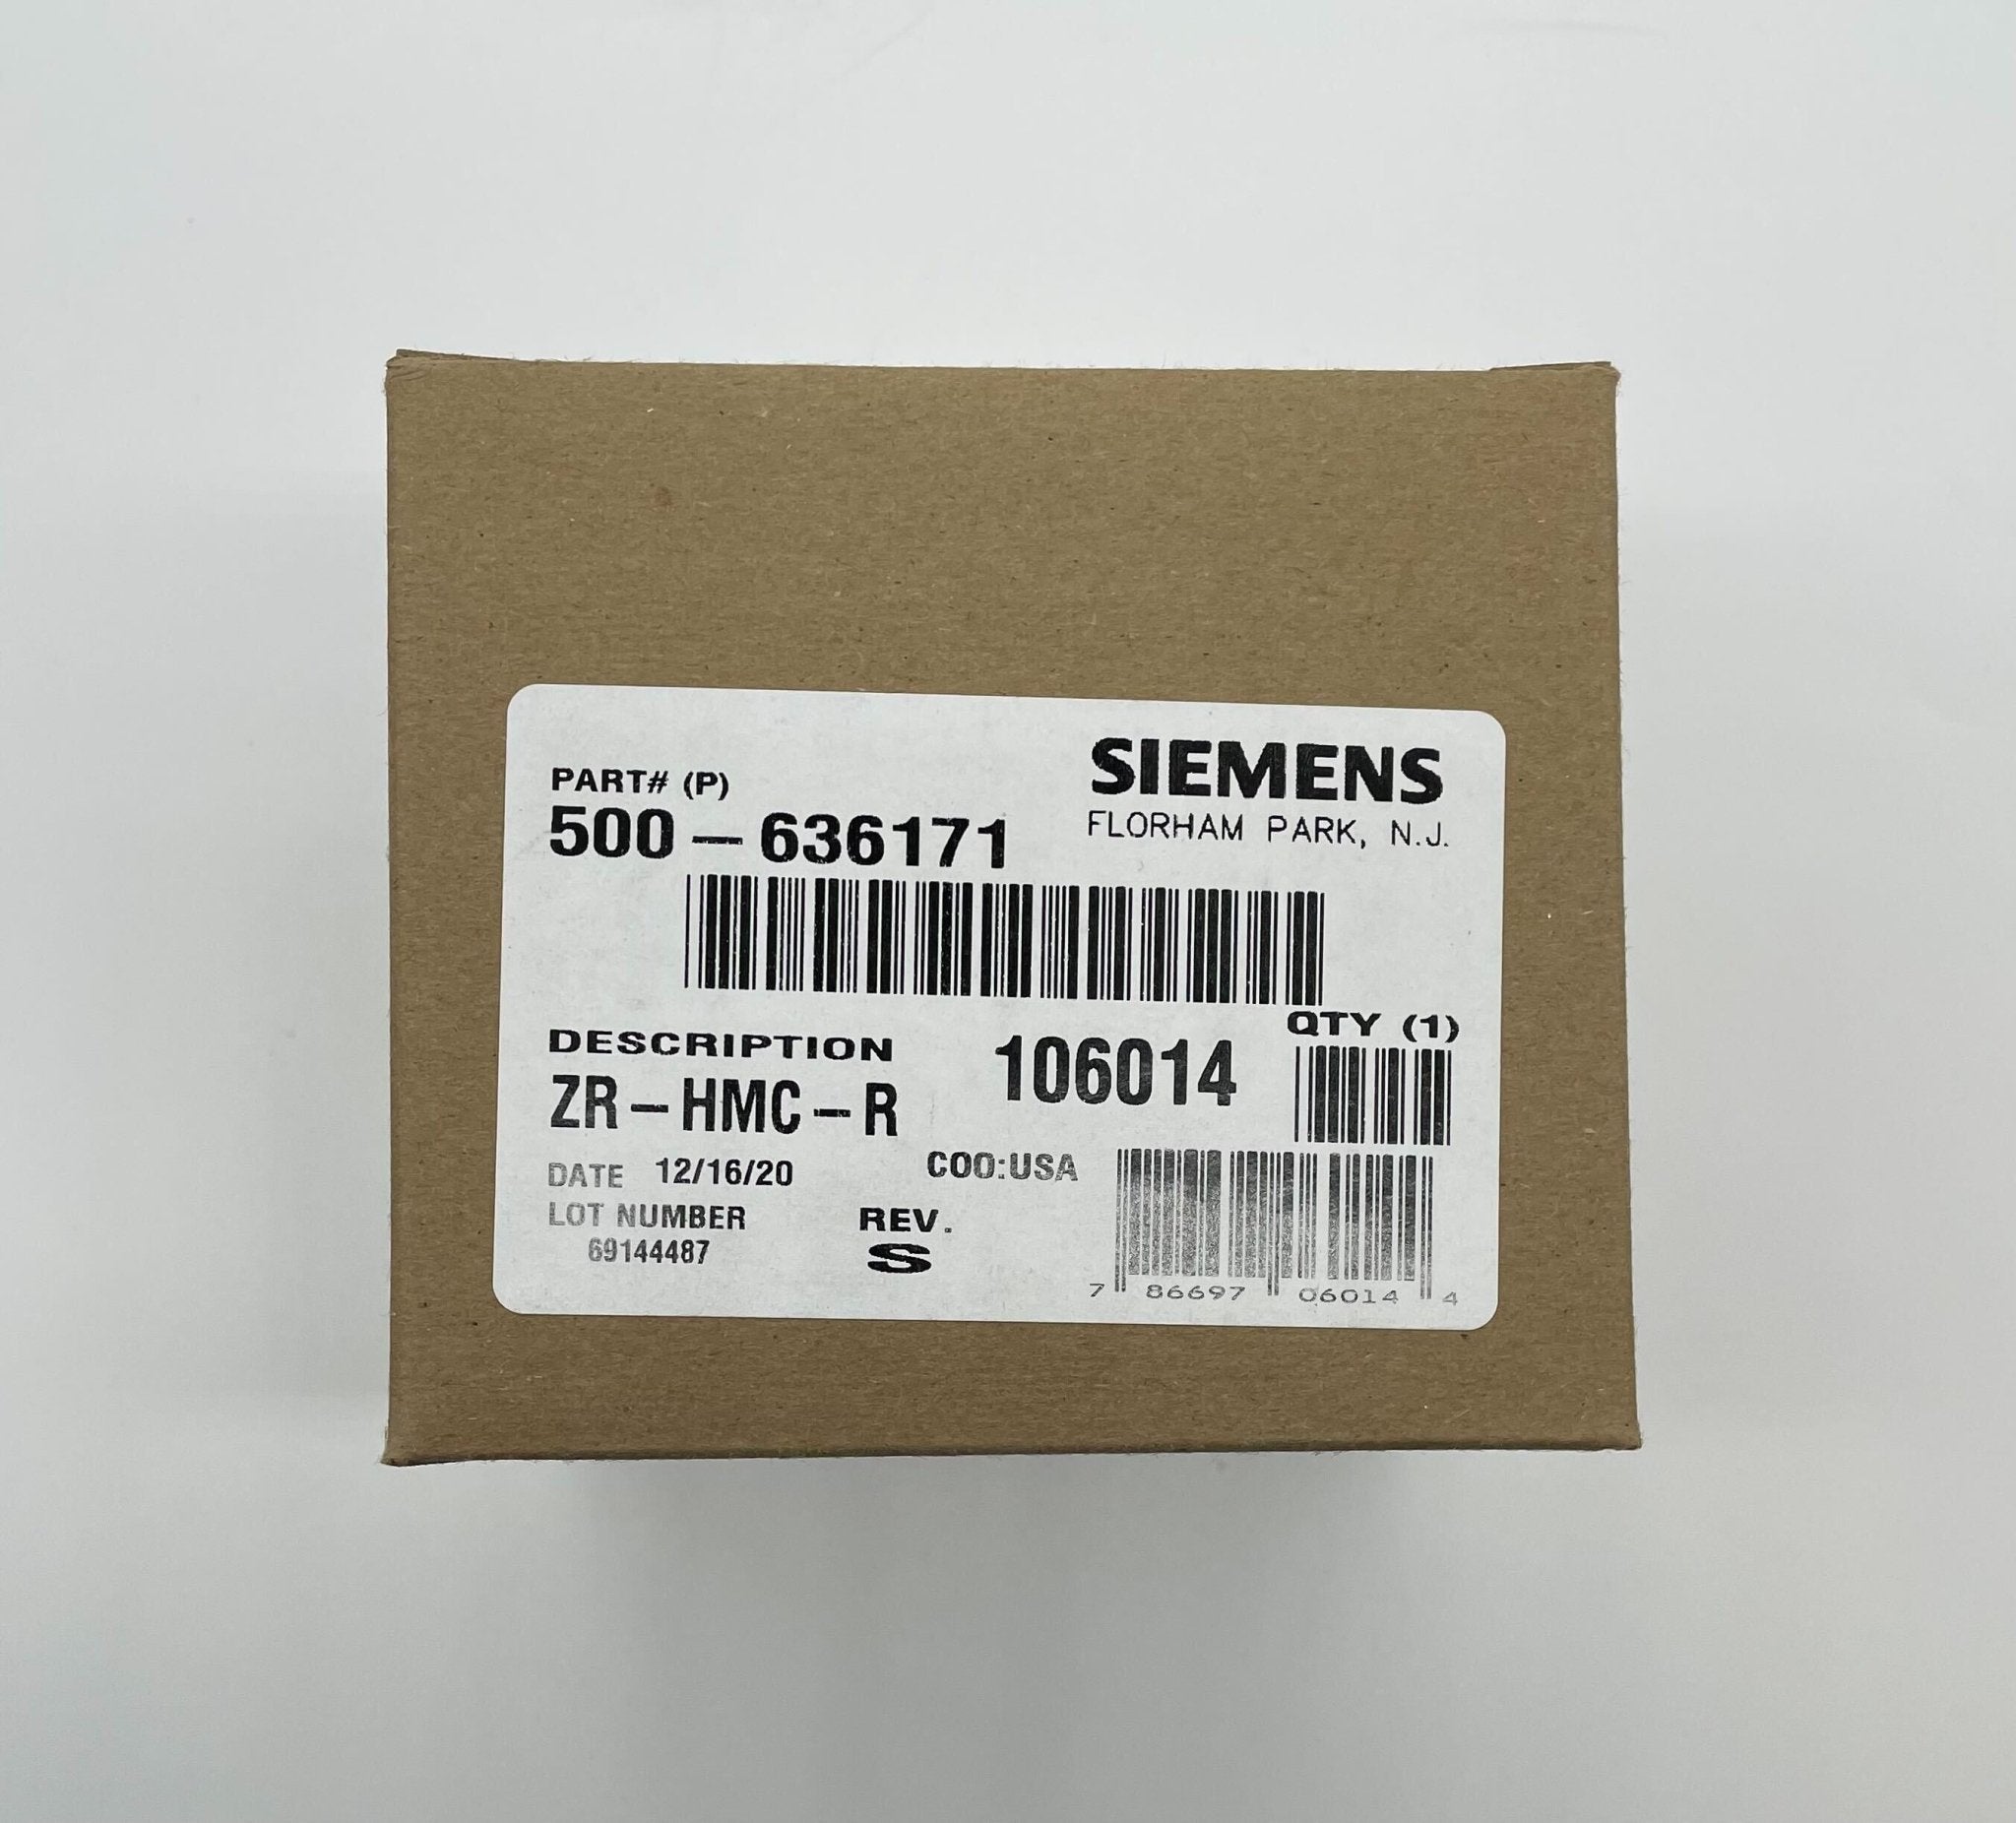 Siemens ZR-HMC-R - The Fire Alarm Supplier